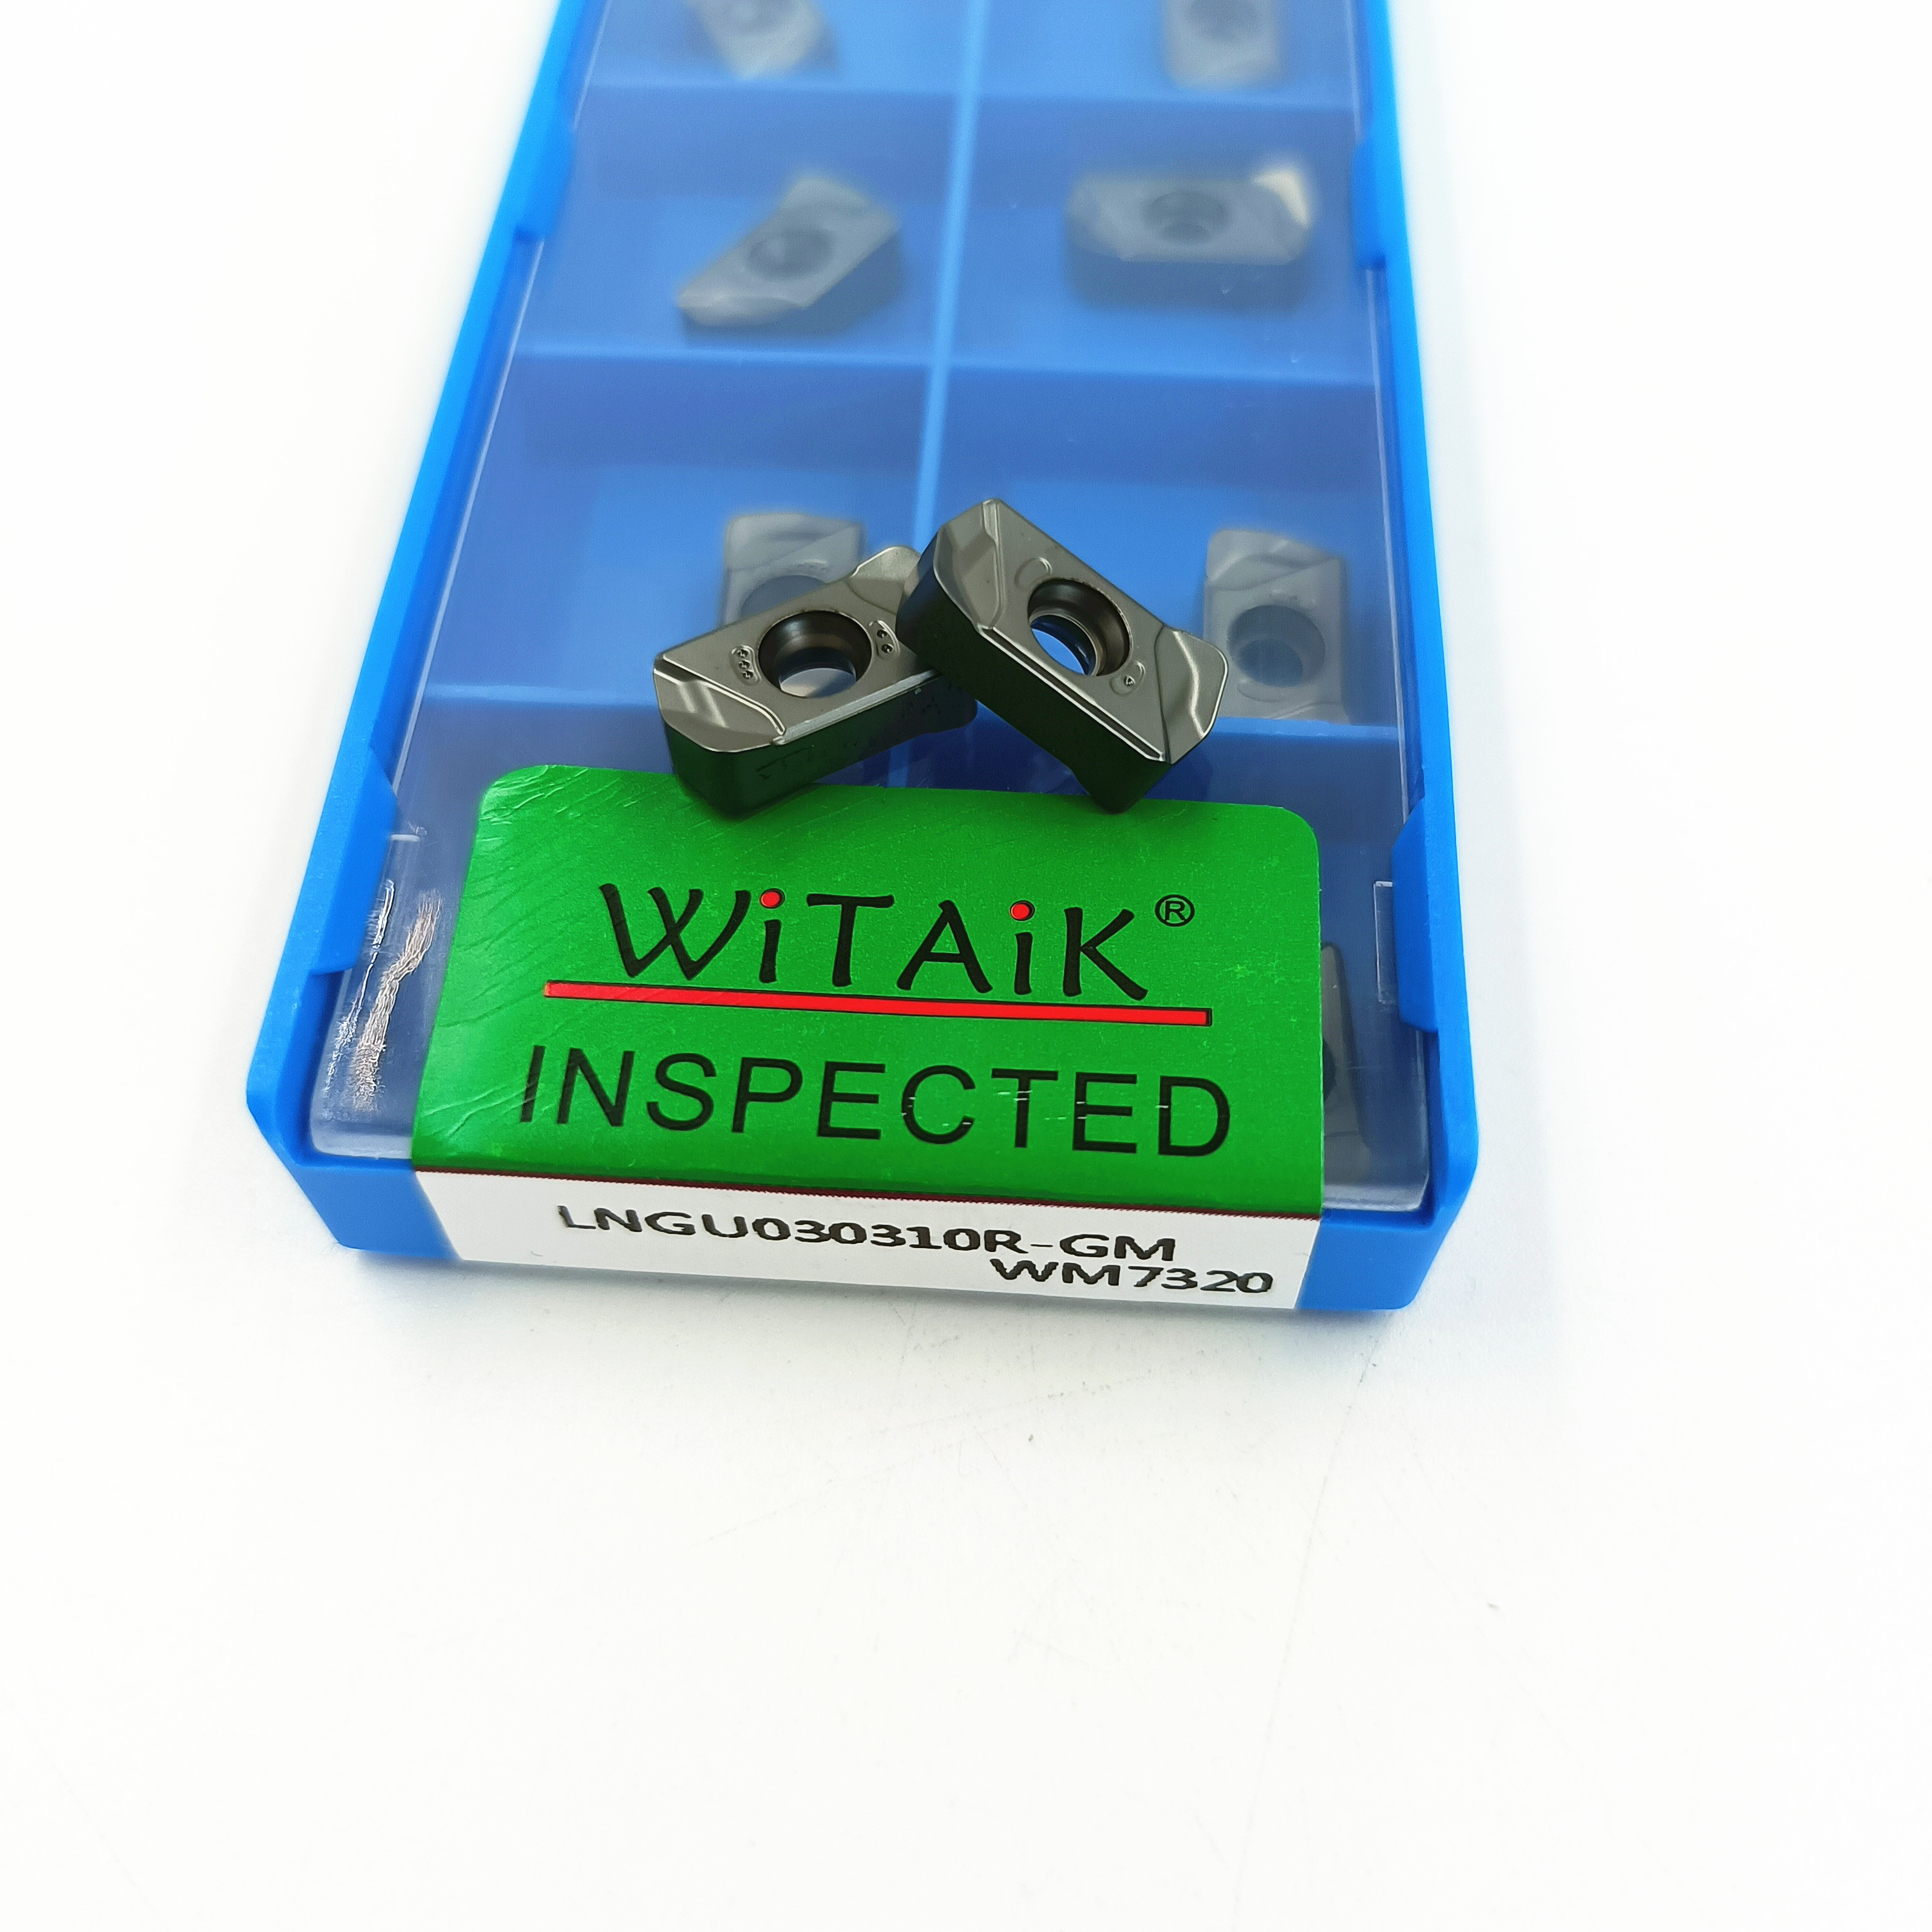 WITAIK fast feed milling carbide inserts LNGU030310R-GM WM7320